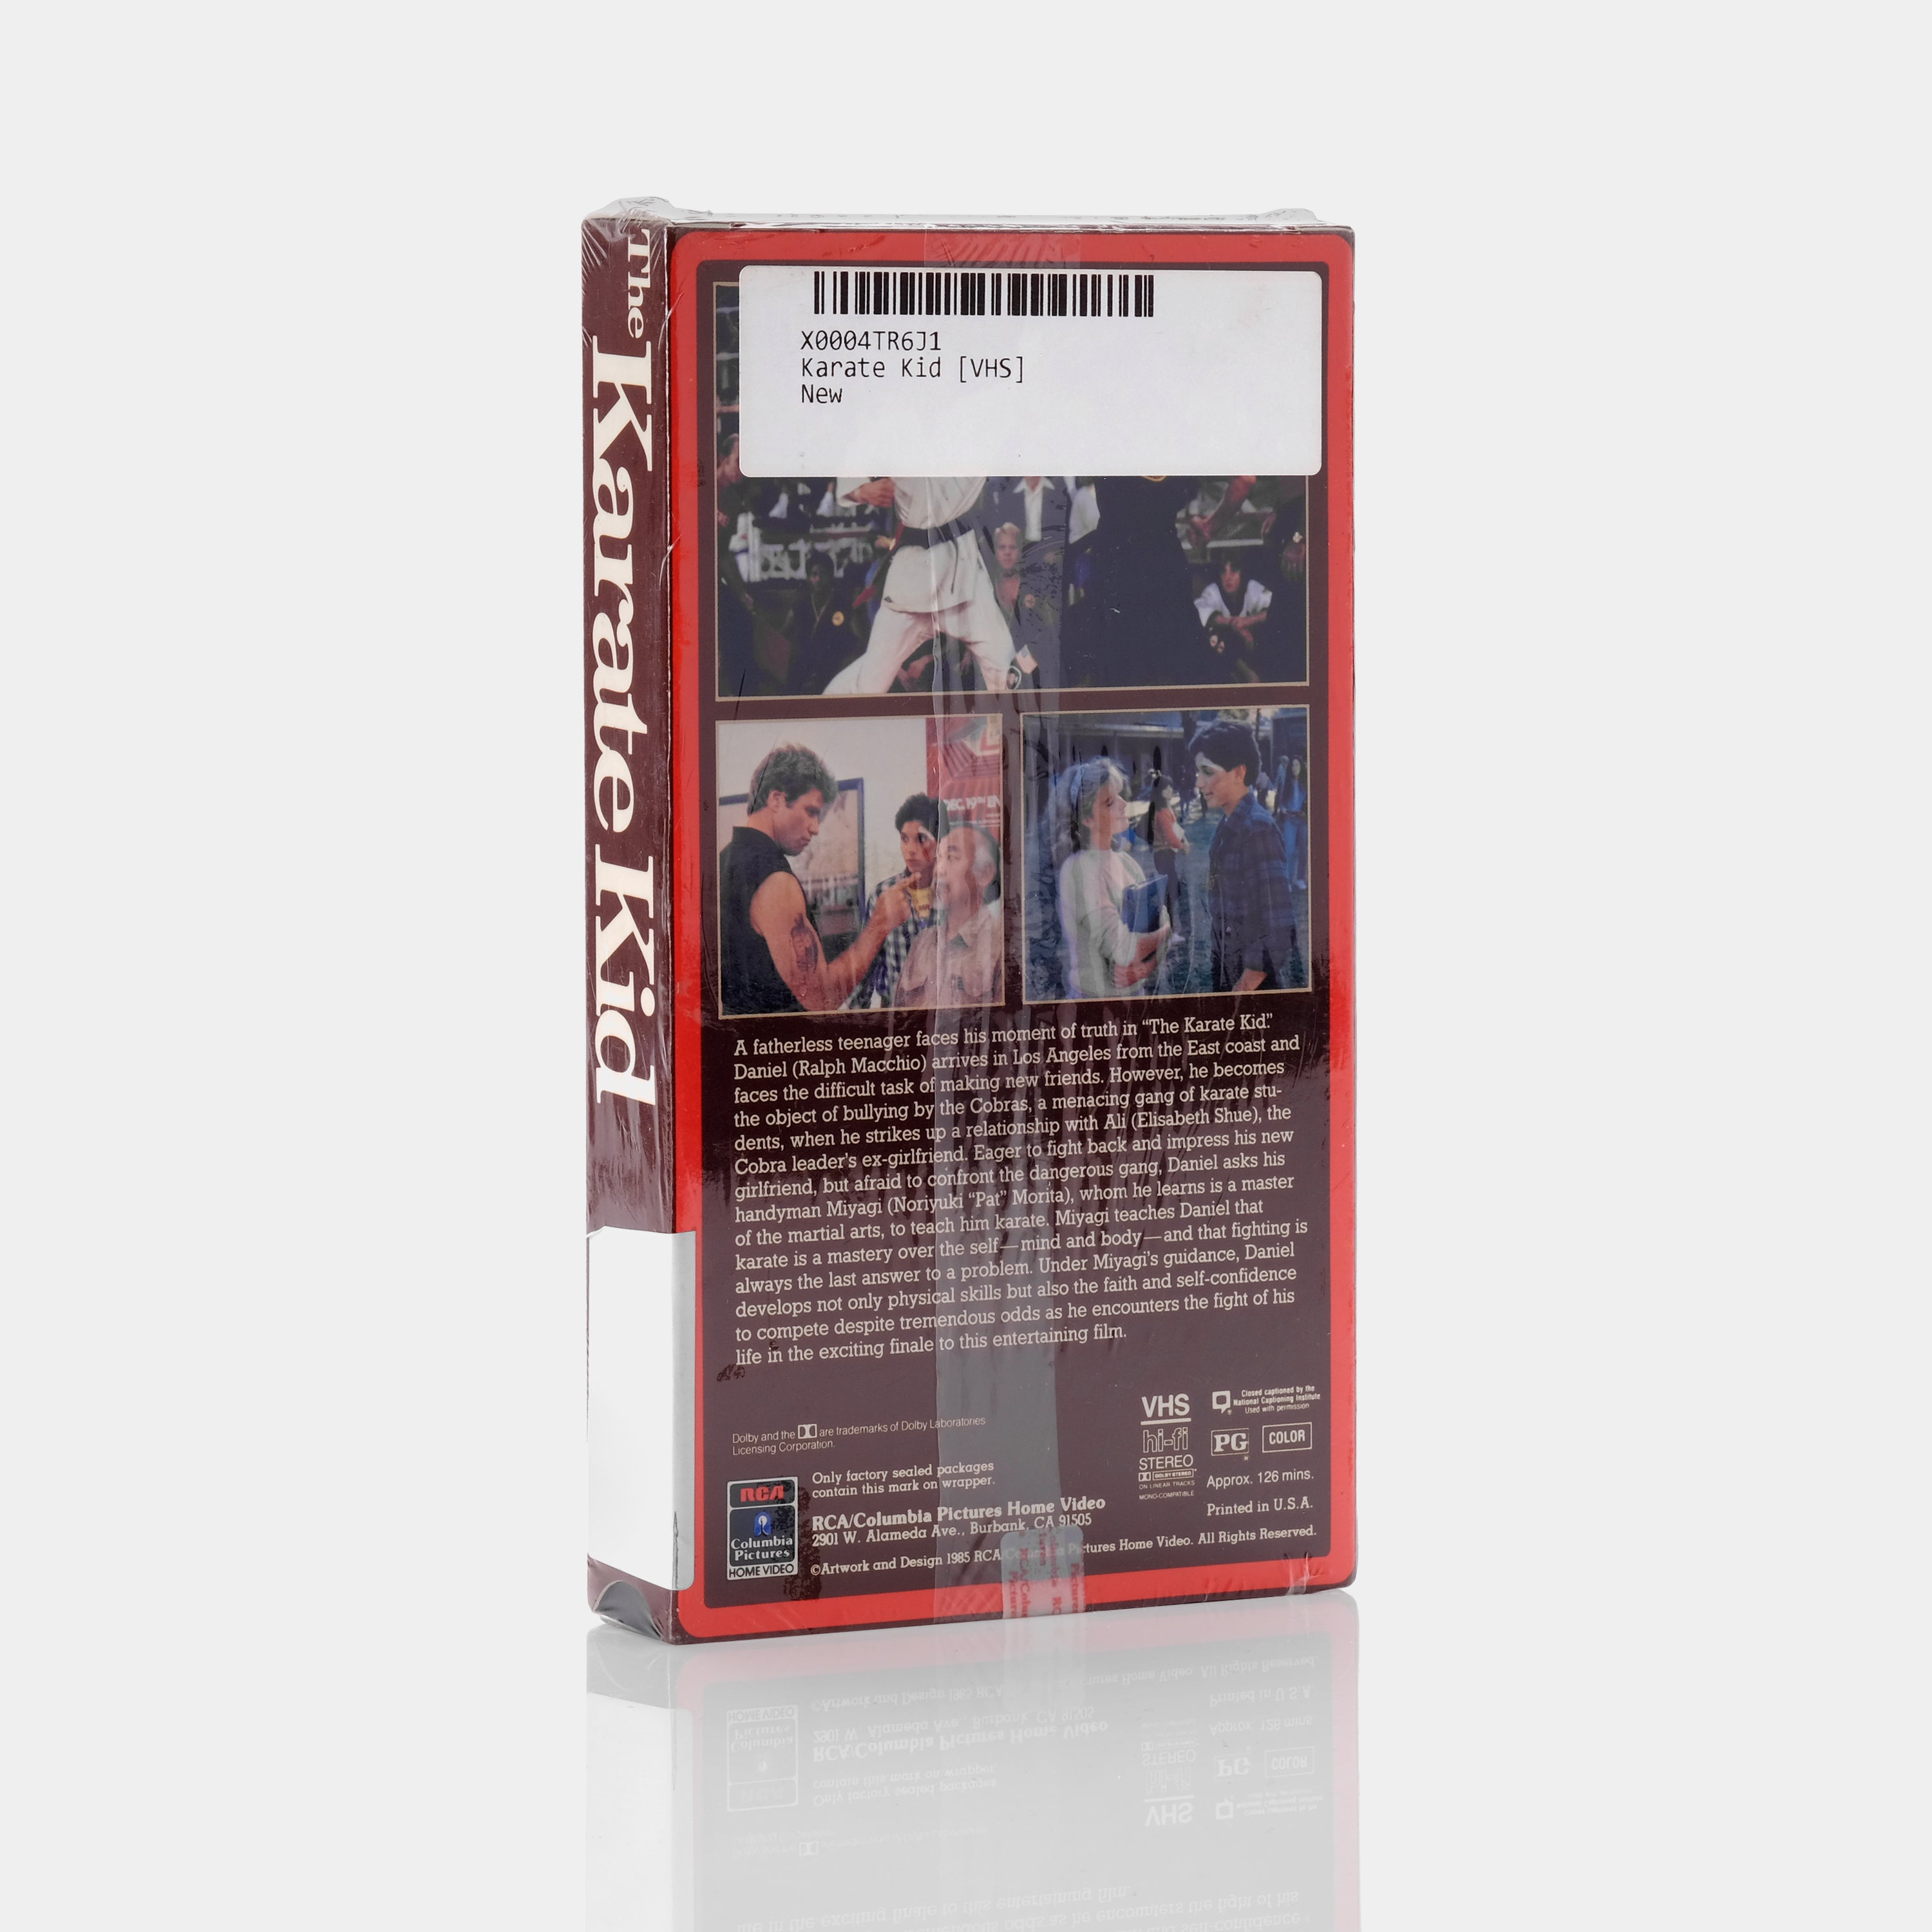 The Karate Kid (Sealed) VHS Tape